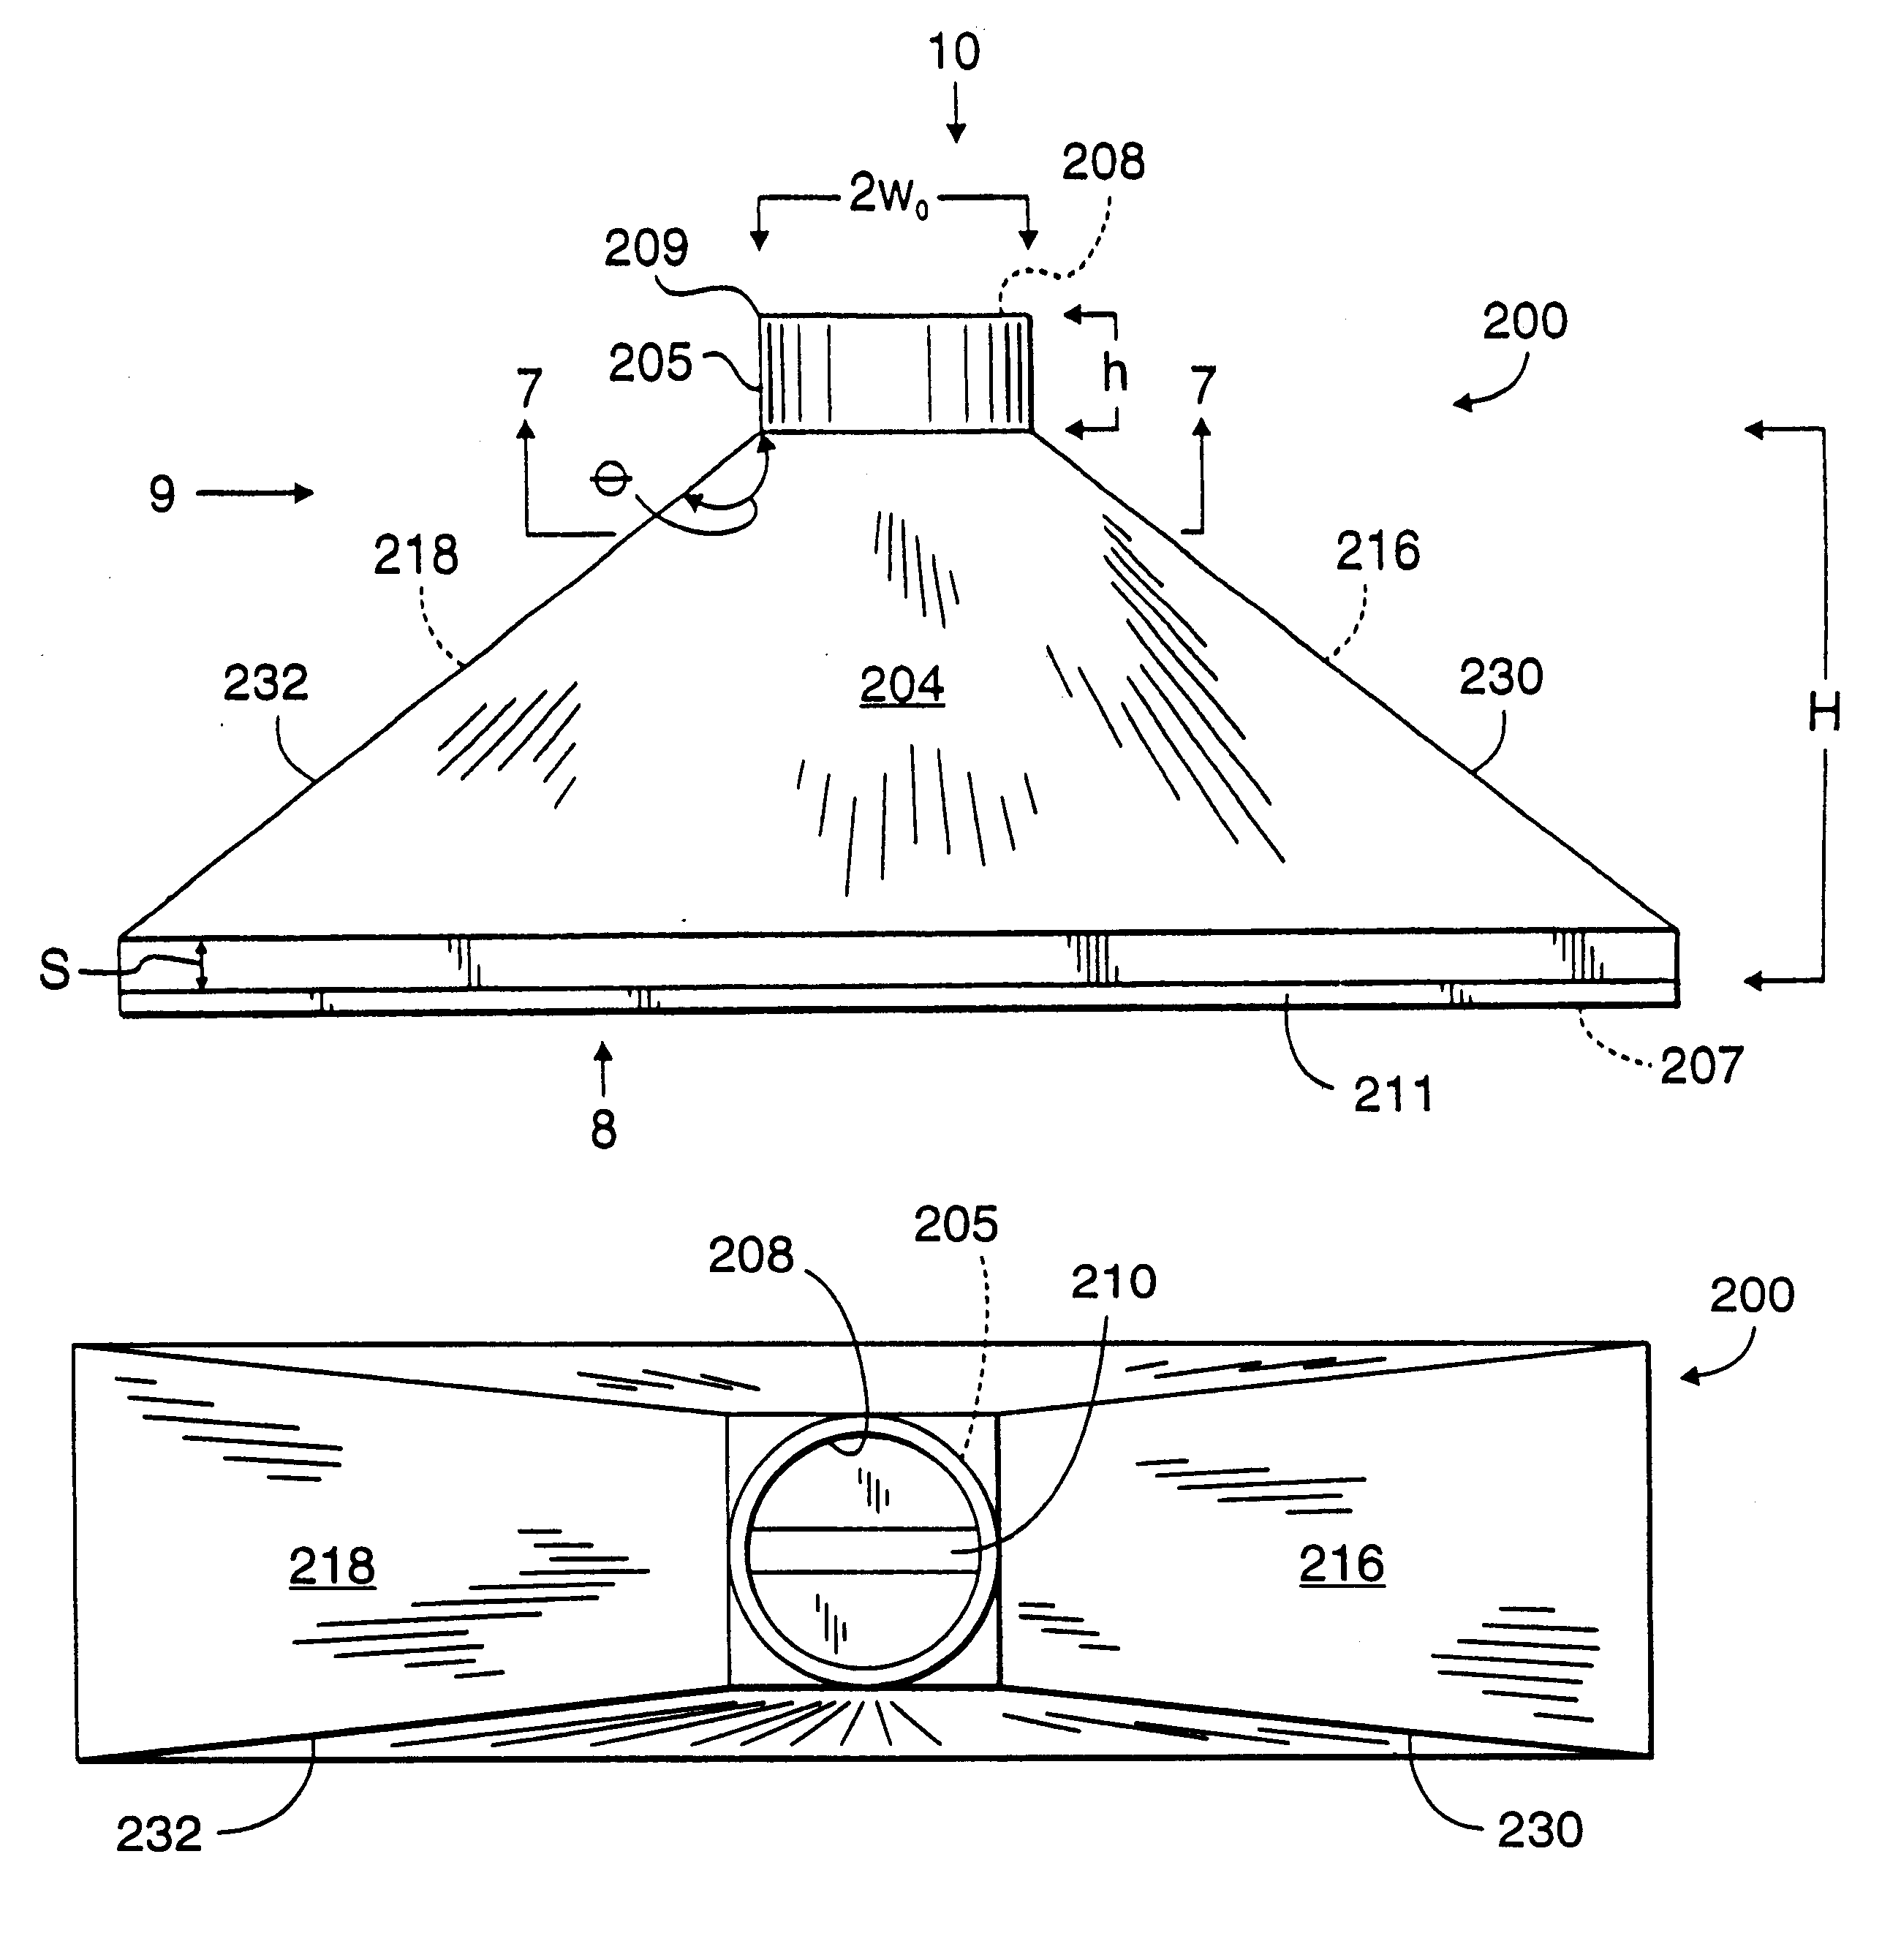 Method and apparatus for dispensing viscous material